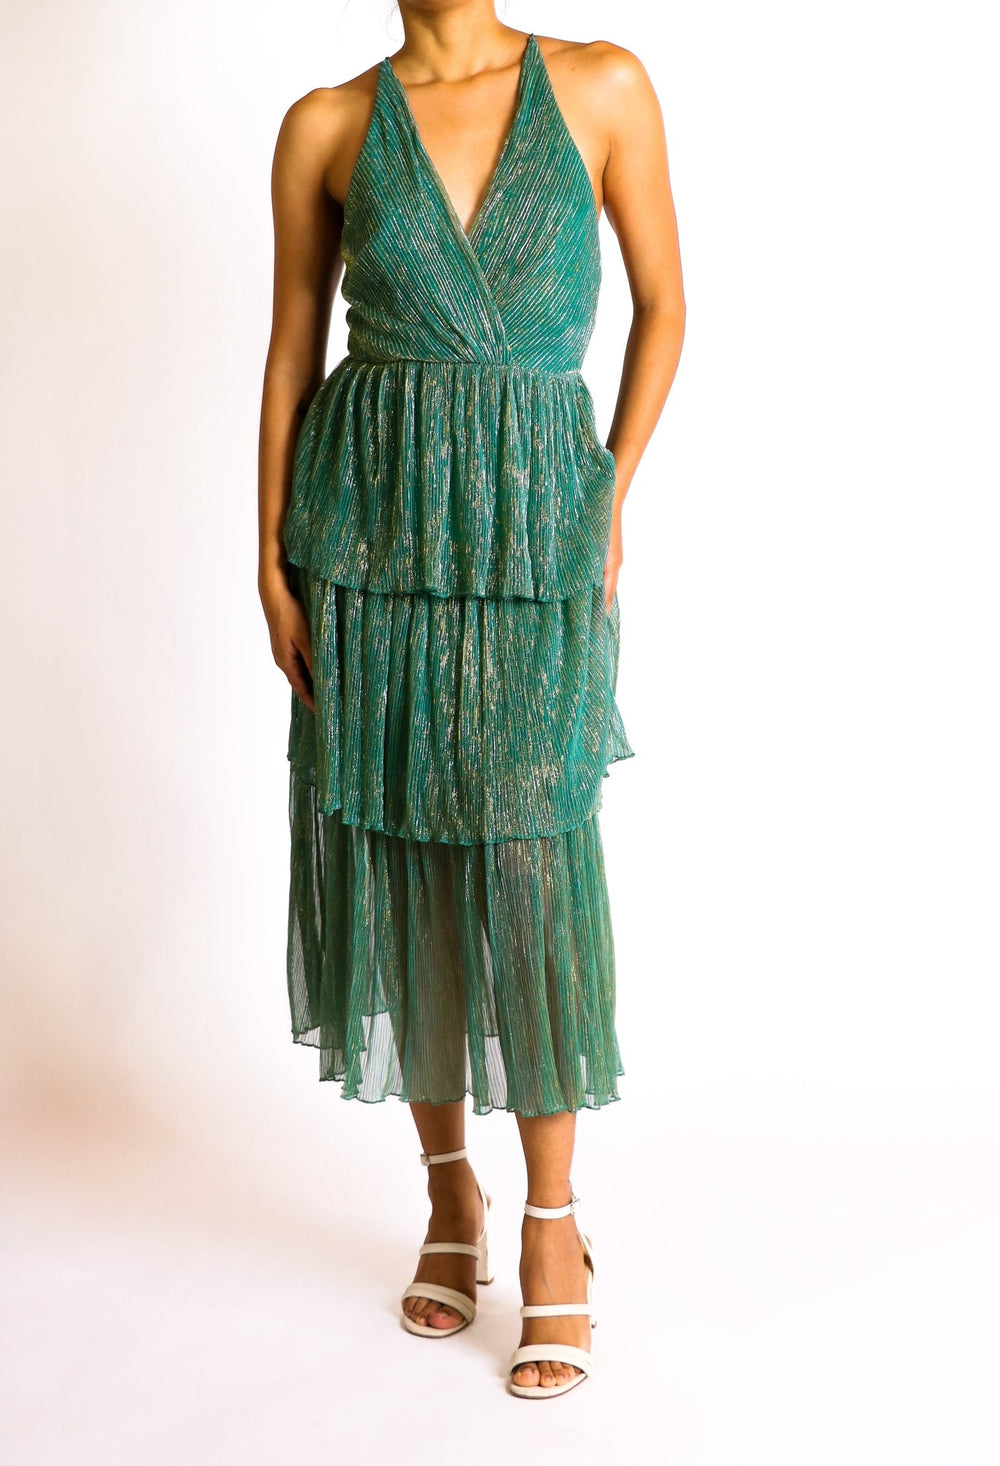 Miriam - Lend the Trend renta de vestidos mexico